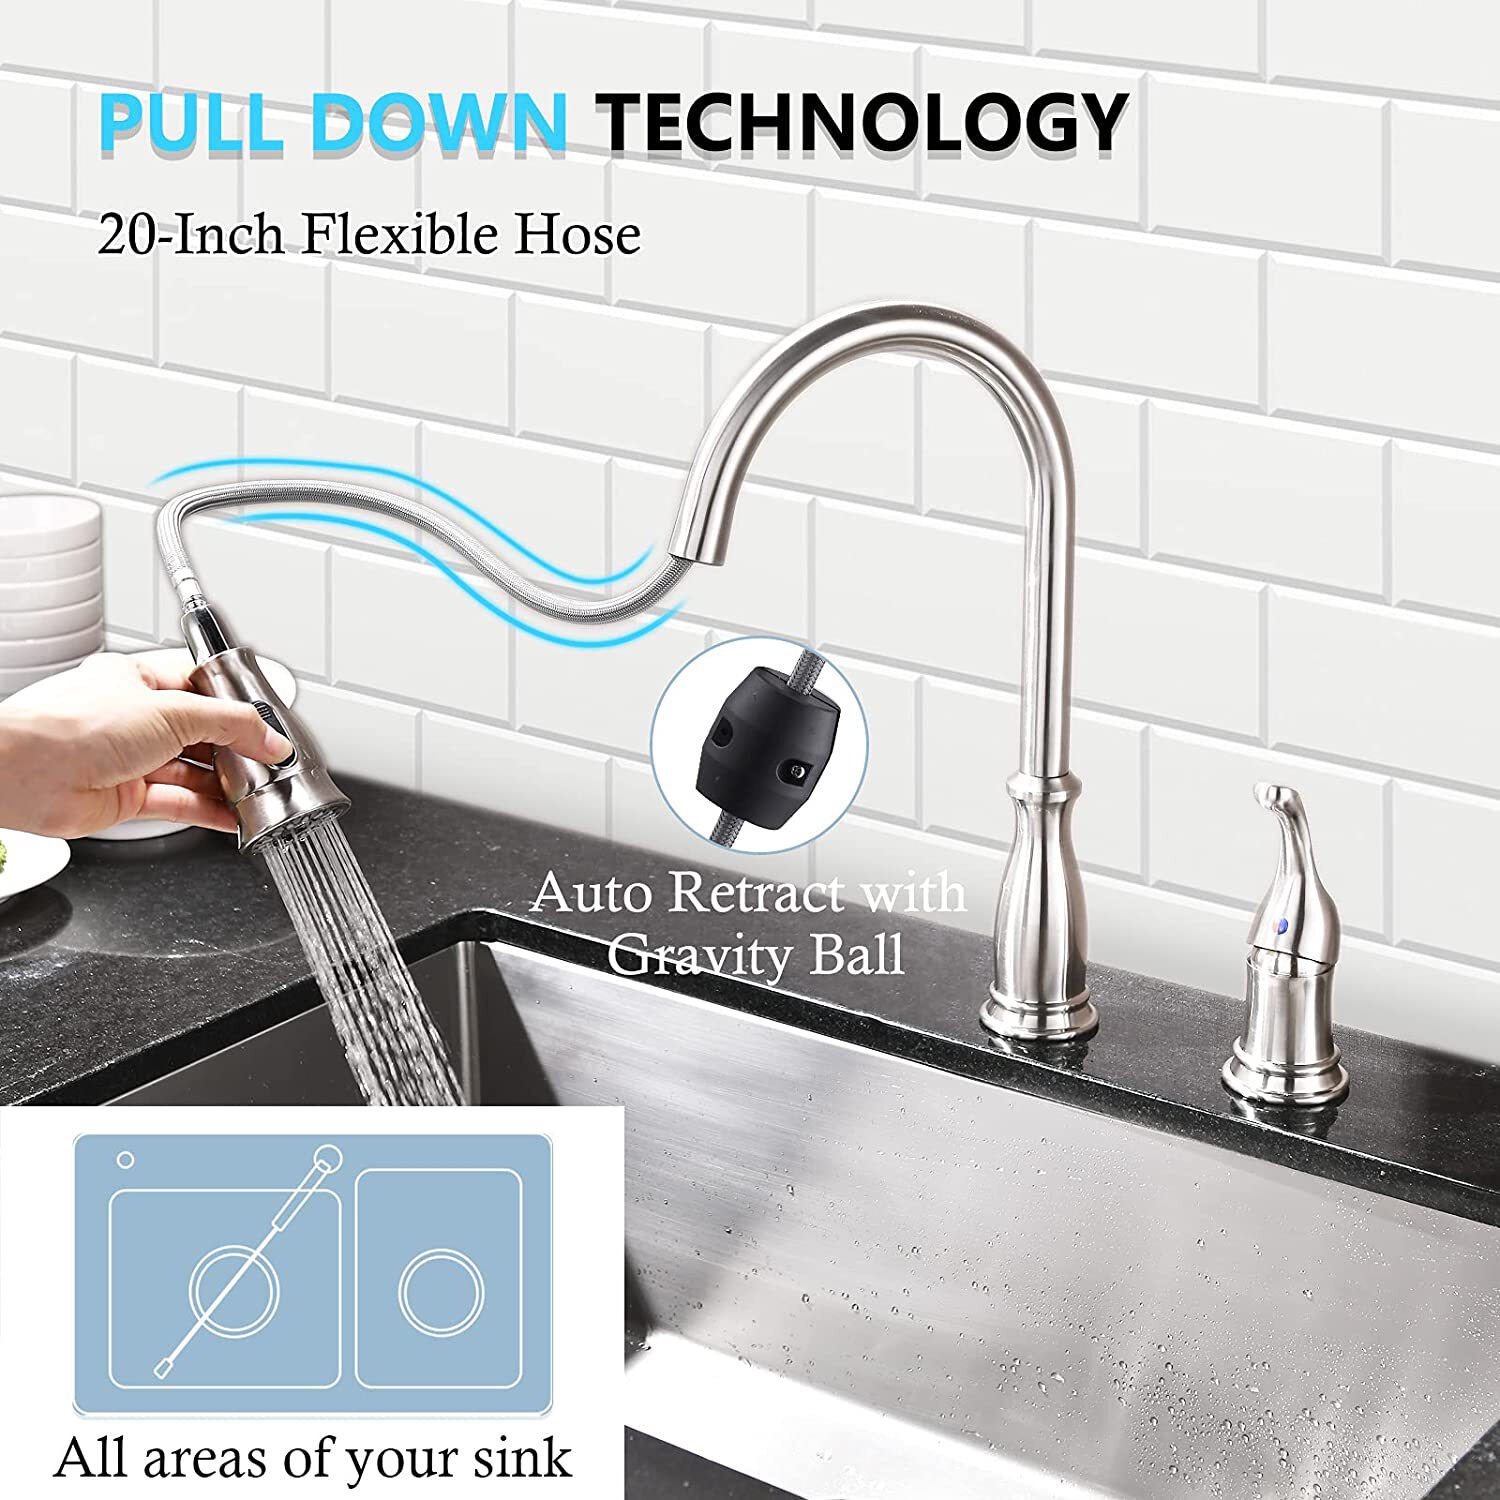 APPASO 3.5 inches Kitchen Sink Drain Strainer Brushed Nickel